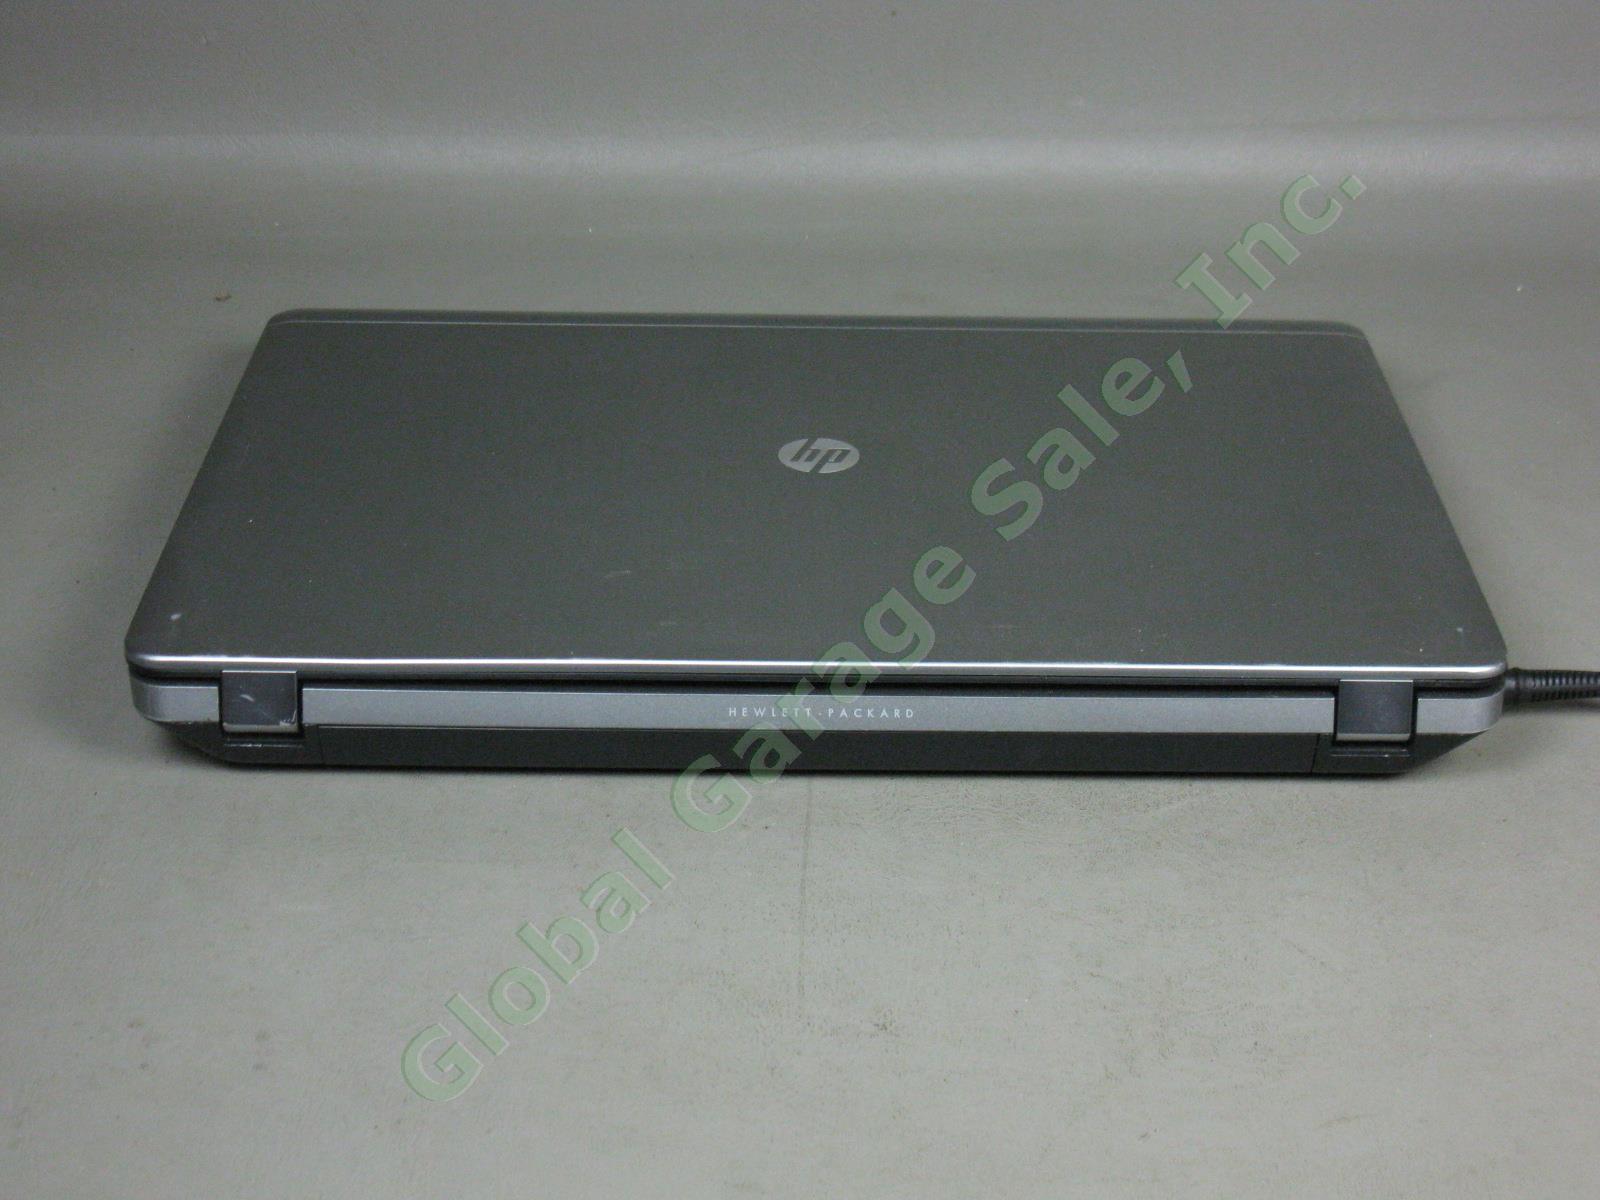 HP ProBook 4540s Laptop Computer Intel Core i3 2.40GHz 500GB 4GB RAM Win 10 Pro 5